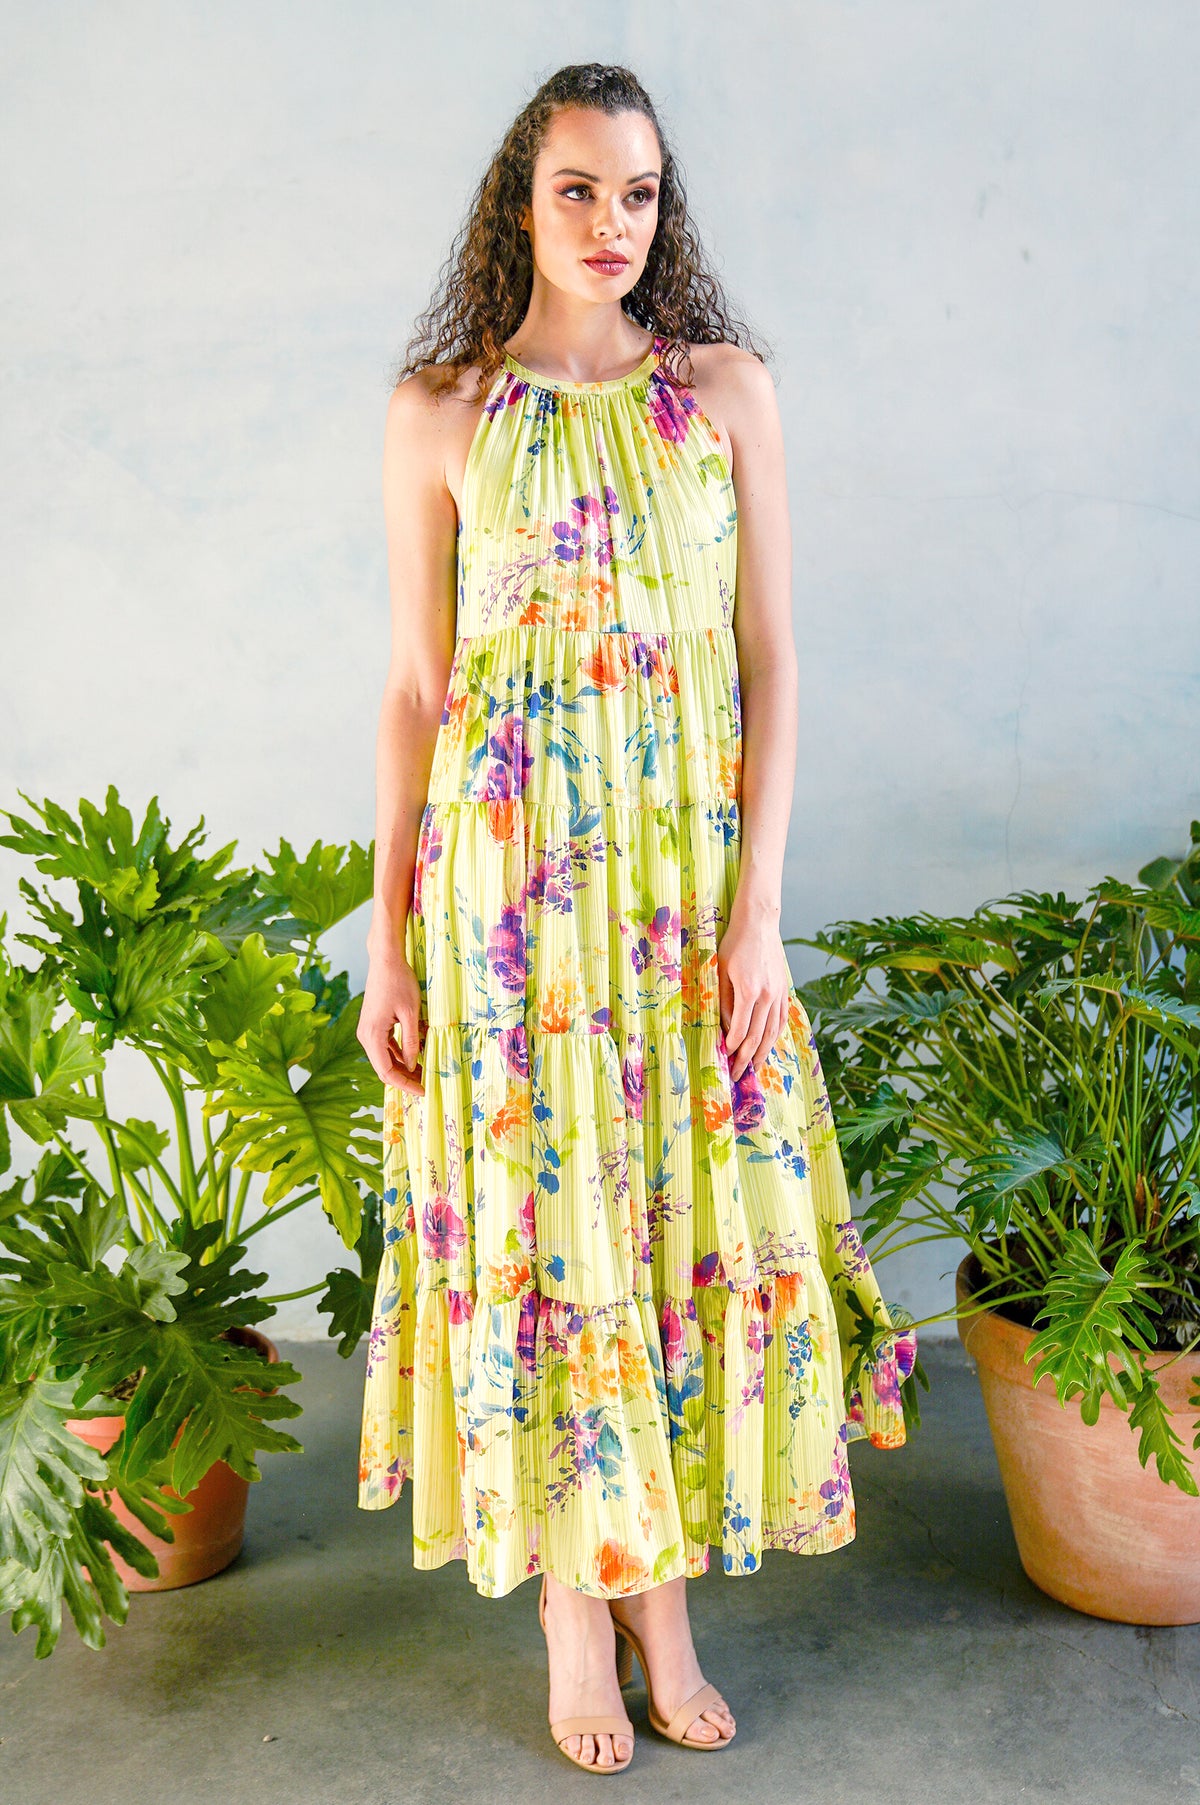 GEMMA Lime Floral Metallic Satin Dress - Front View - Harleen Kaur